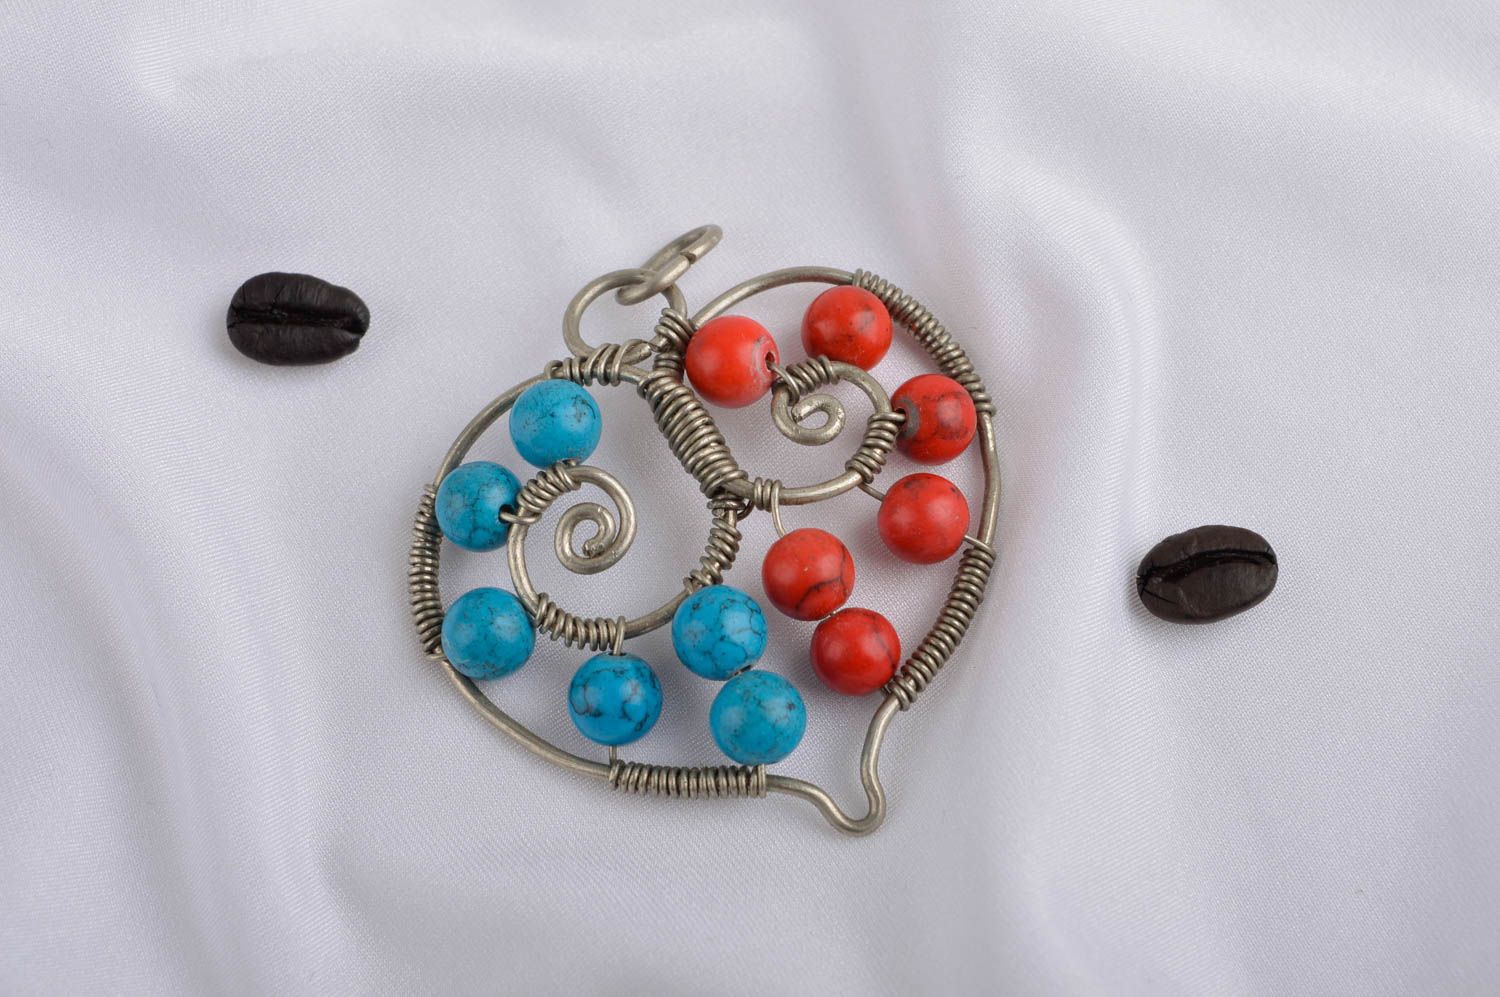 Gemstone necklace handmade jewelry women accessories pendant necklace gift ideas photo 1